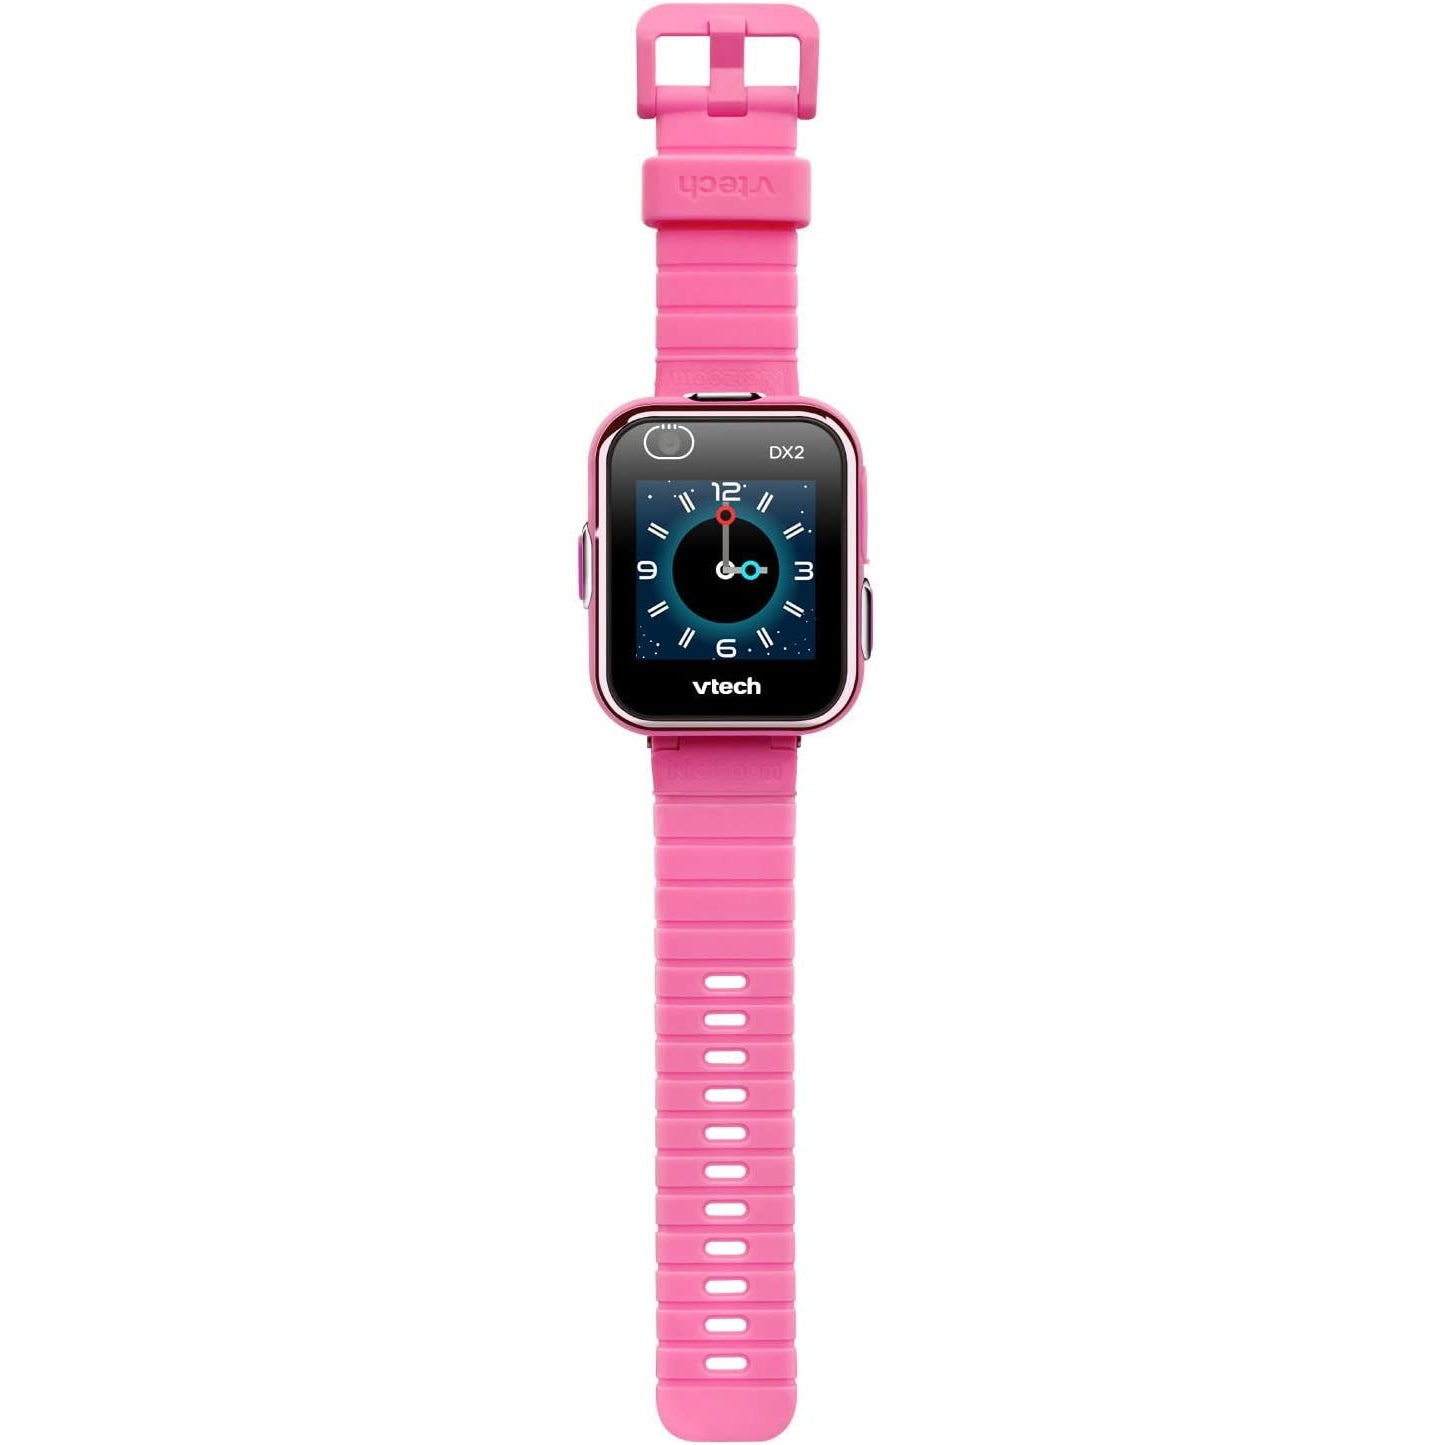 VTech Kidizoom DX2 Smart Watch in Pink